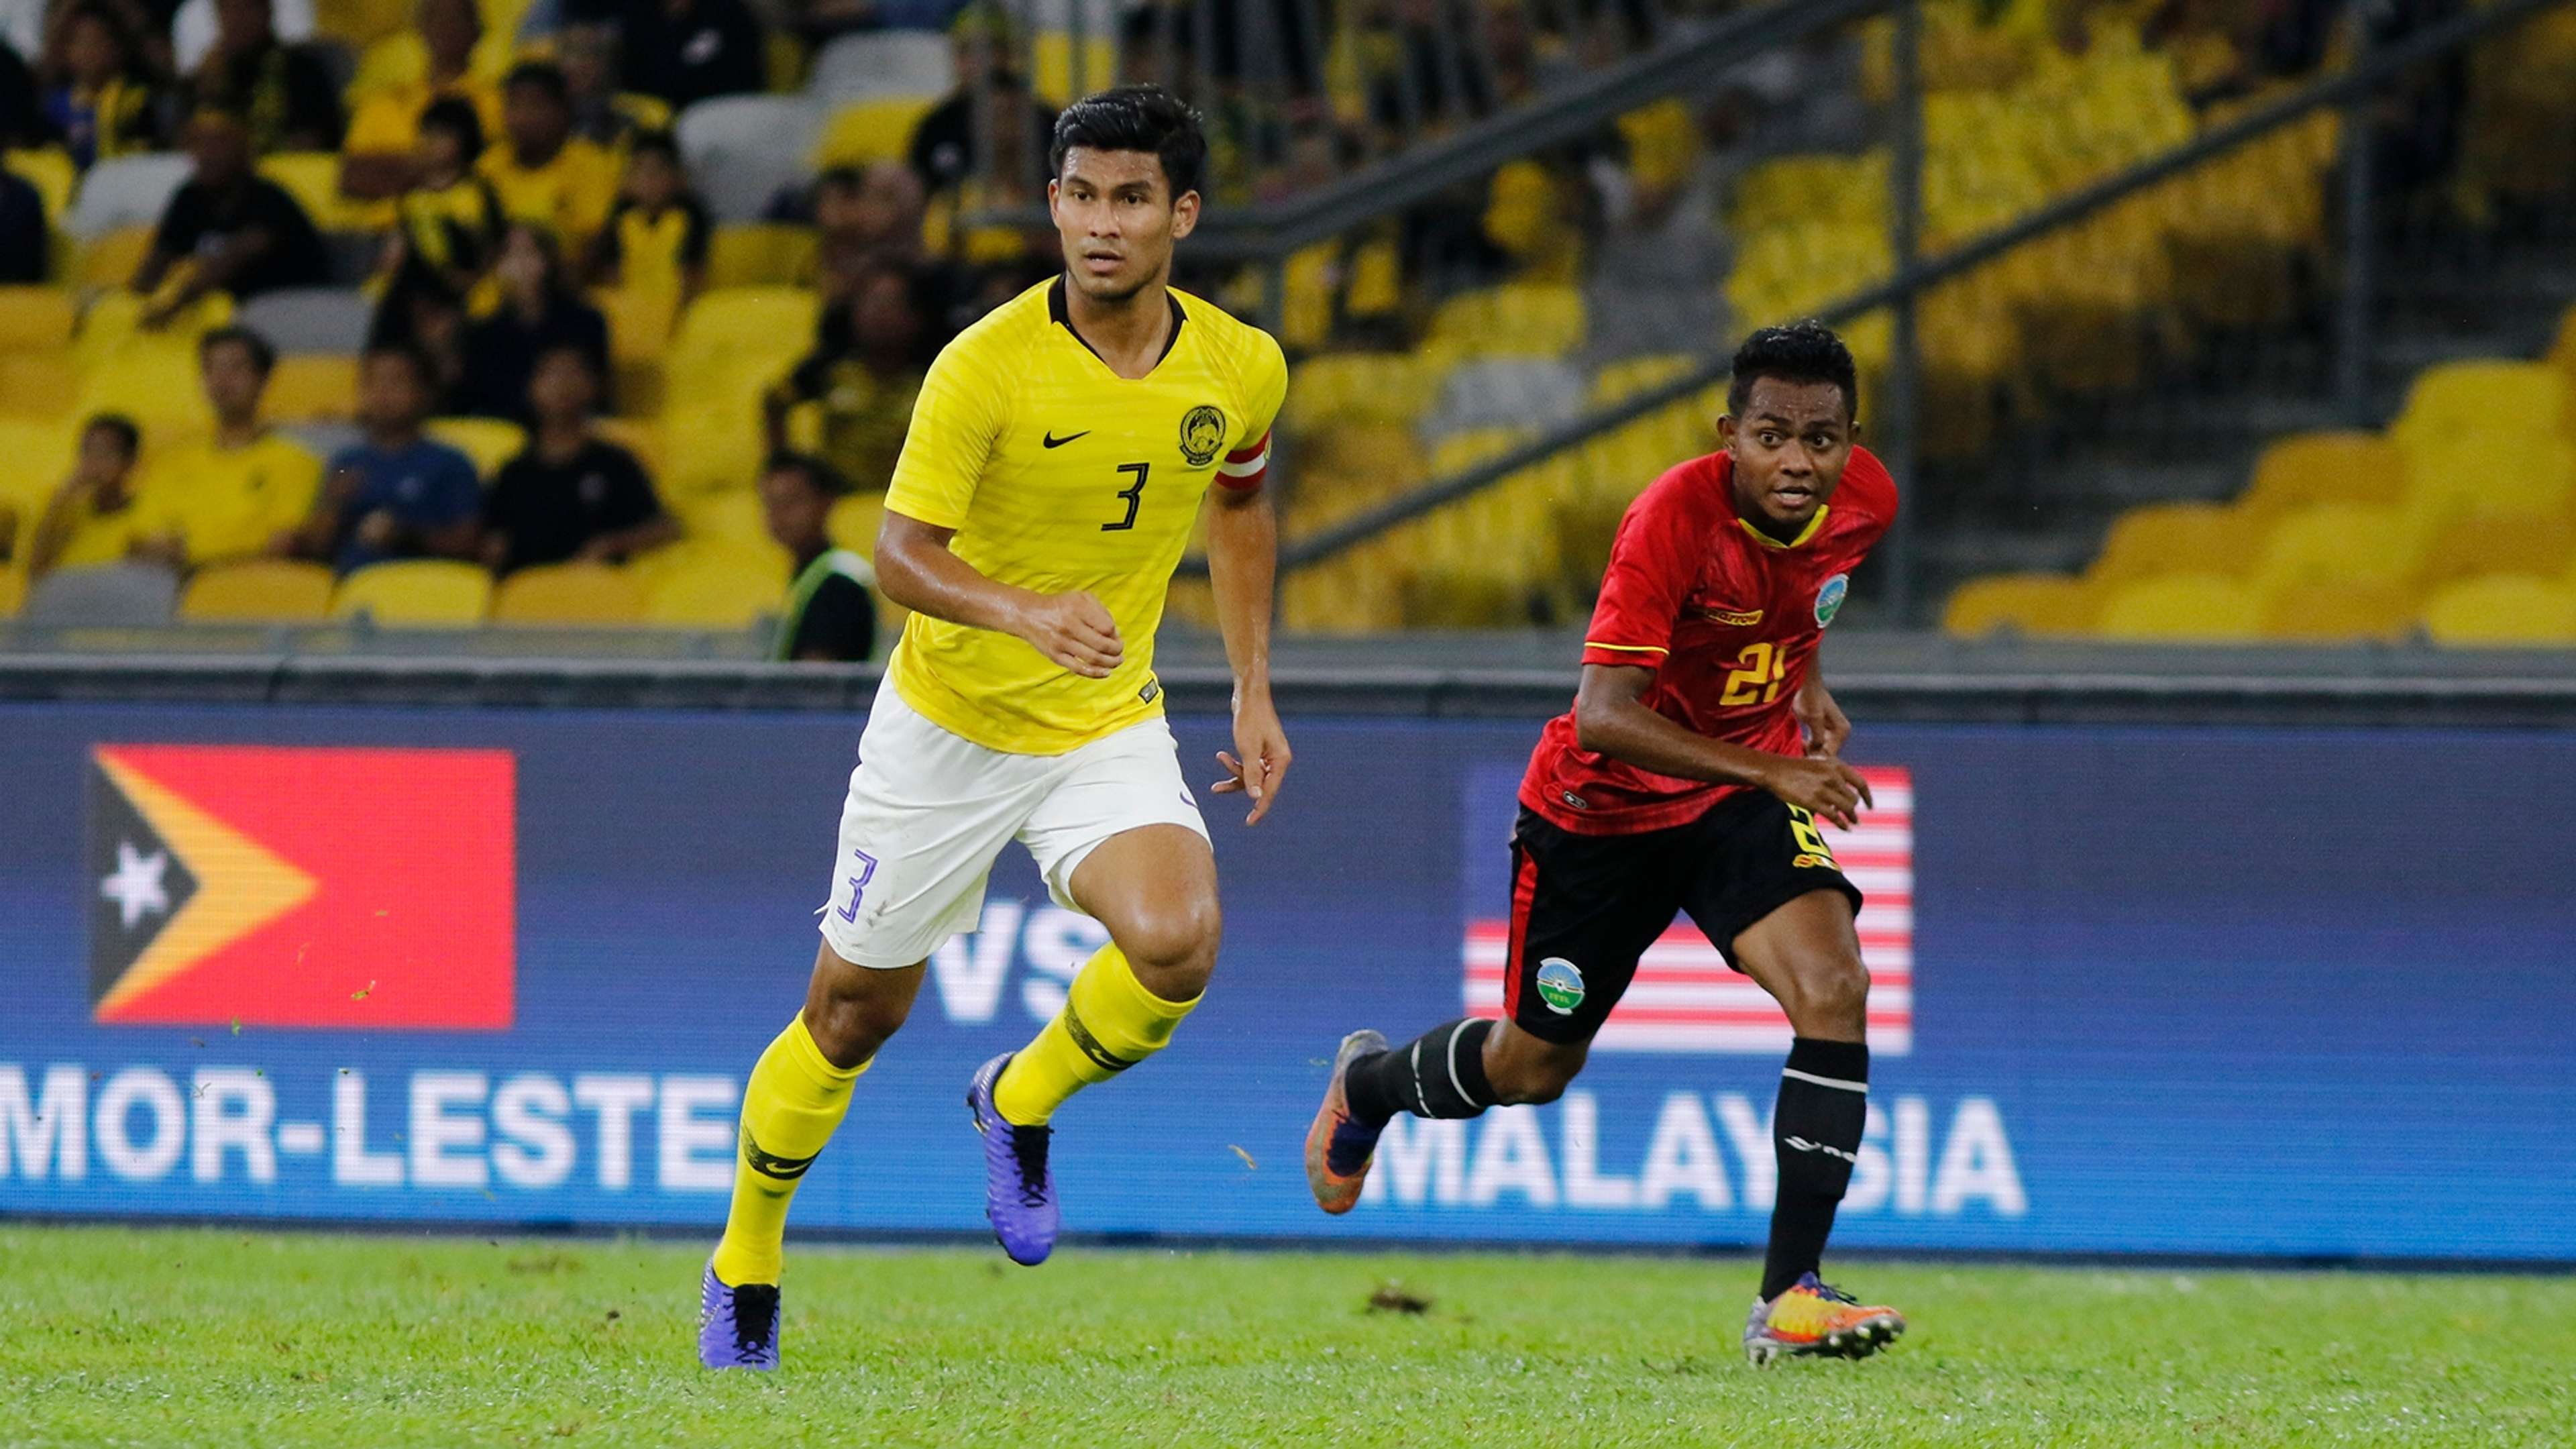 Shahrul Saad, Timor Leste v Malaysia, 2022 World Cup qualification, 11 Jun 2019